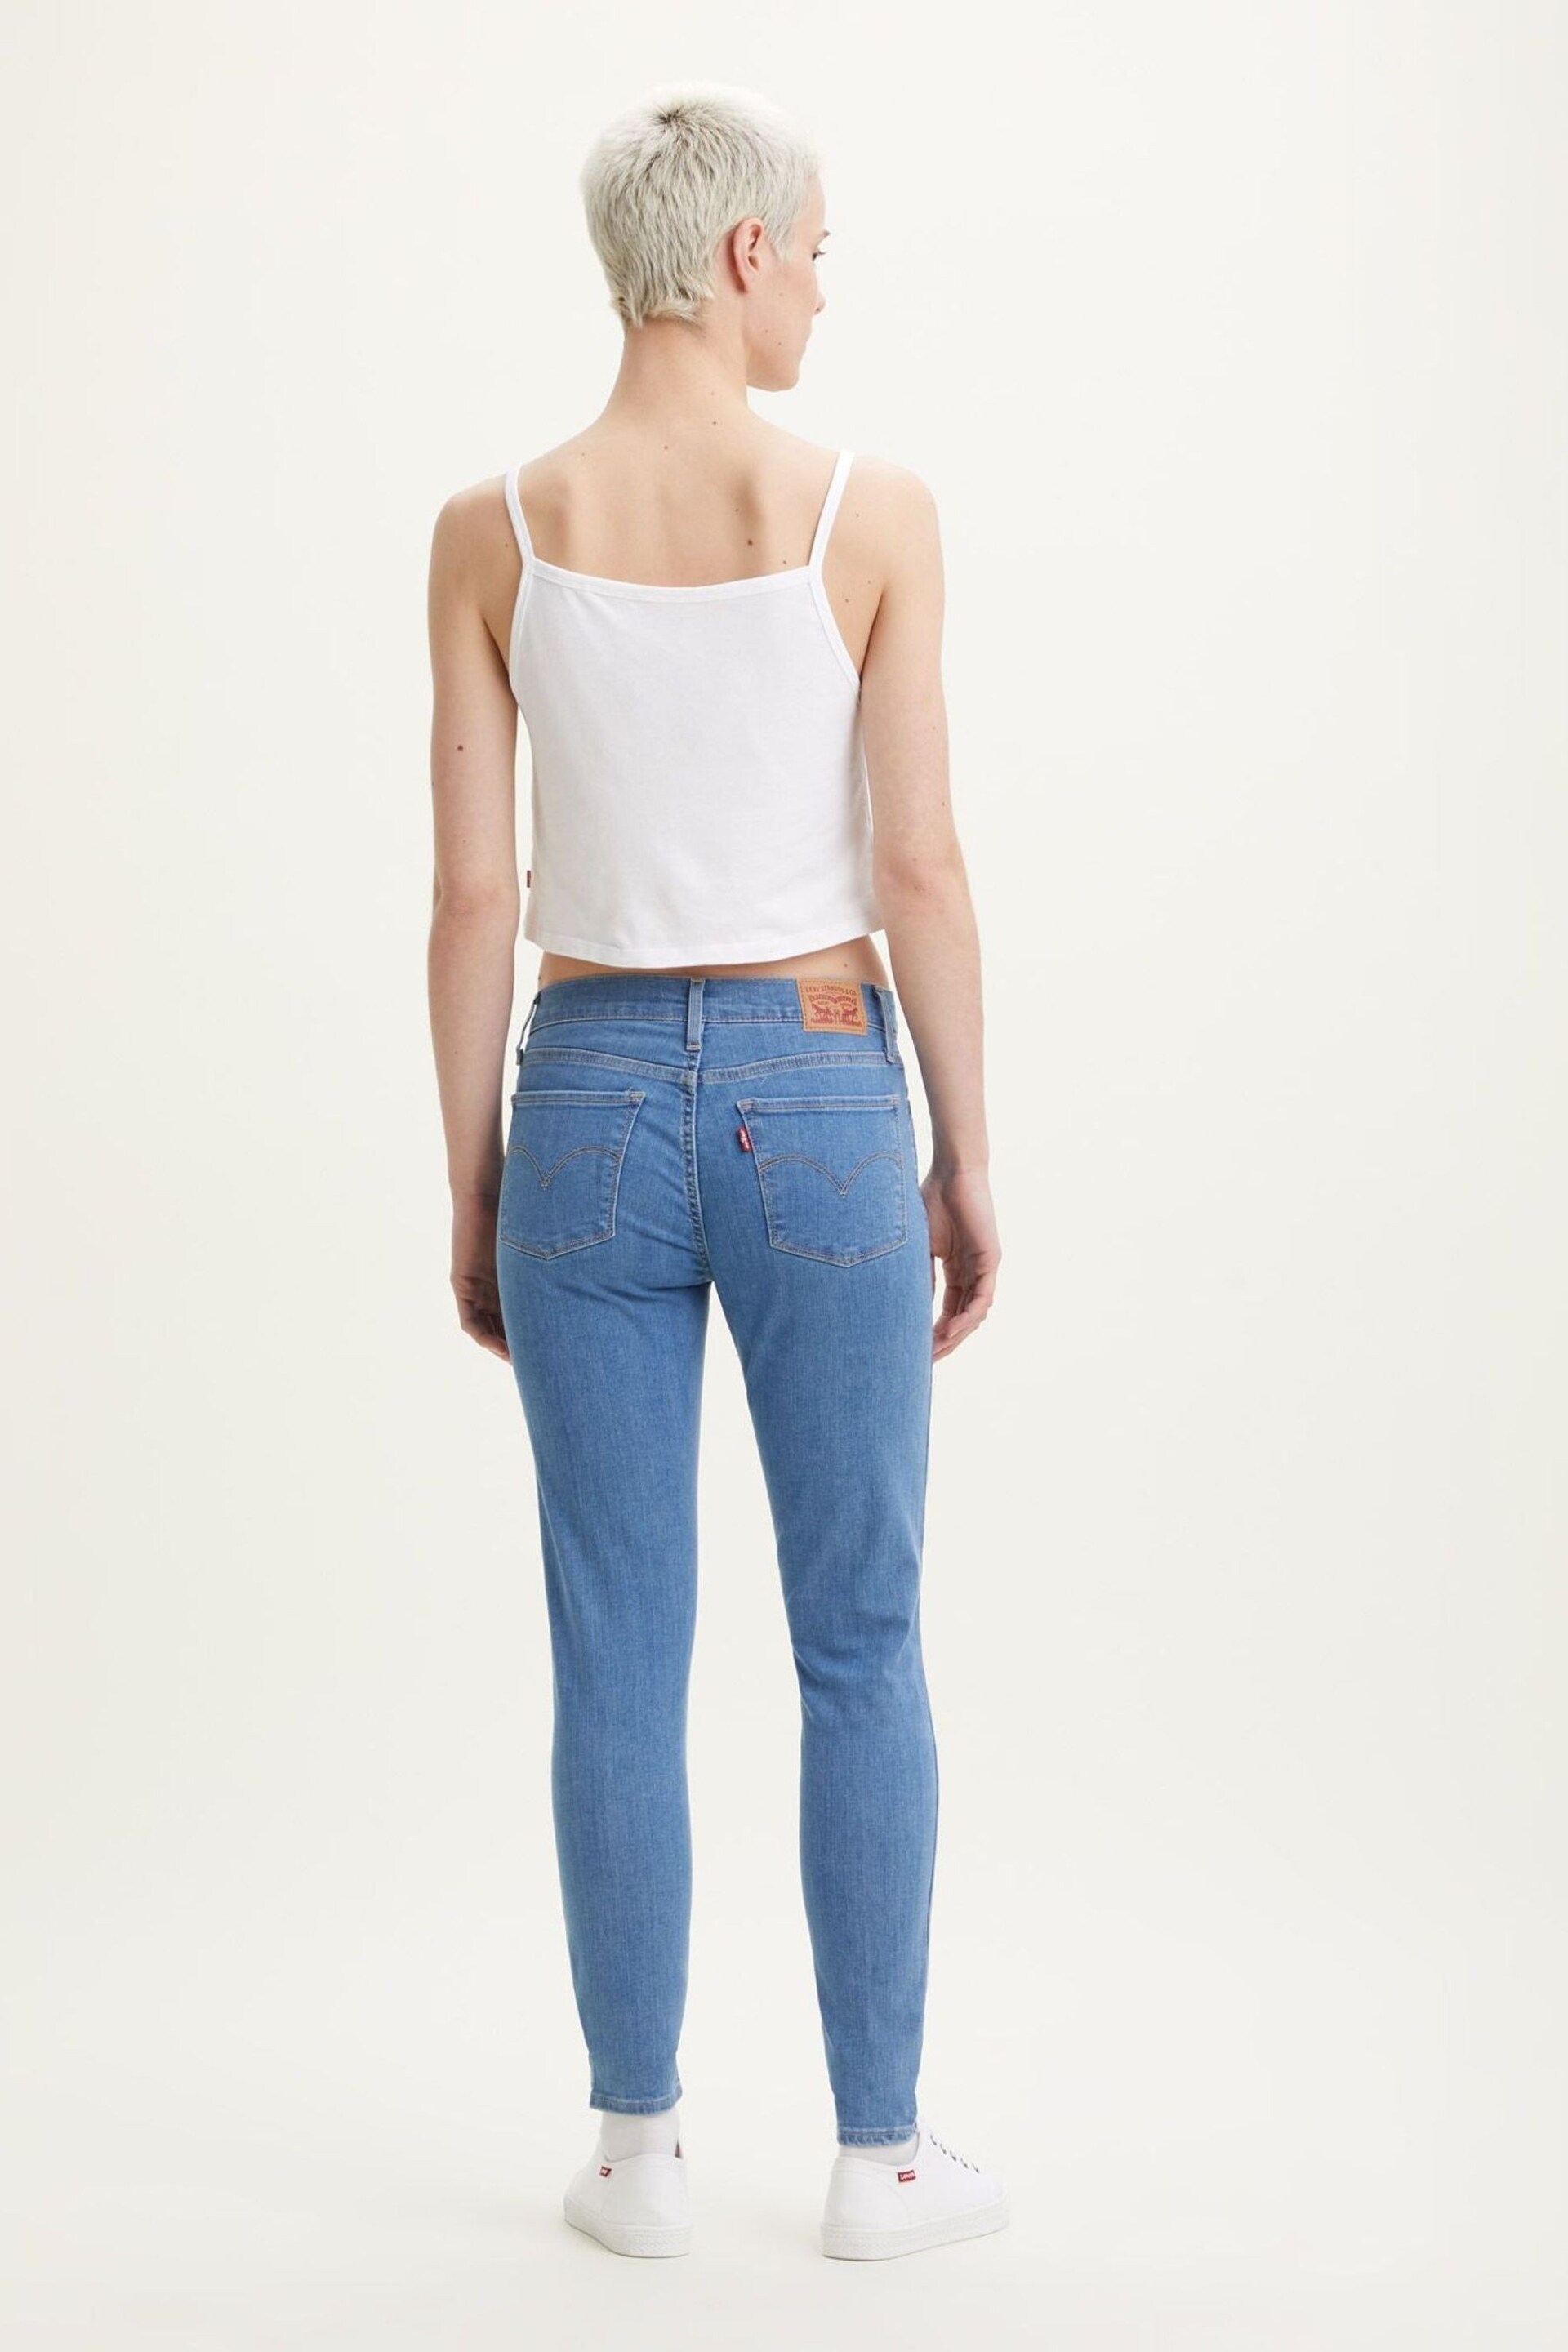 Levi's® Blue Sky 710™ Super Skinny Jeans - Image 2 of 7